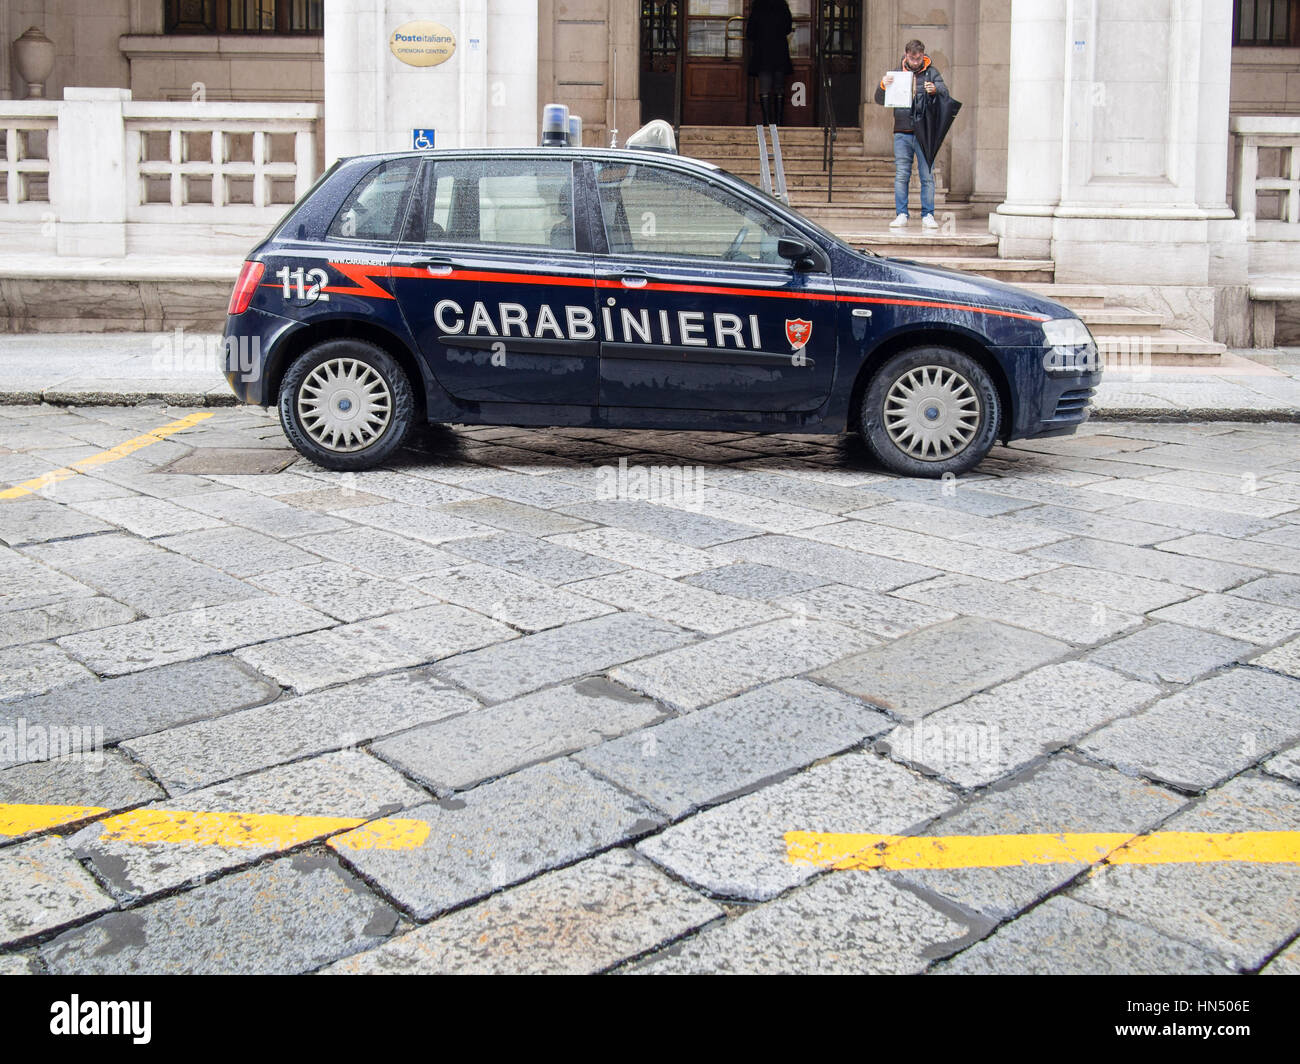 Carabinieri italian police fiat patrol. Stock Photo